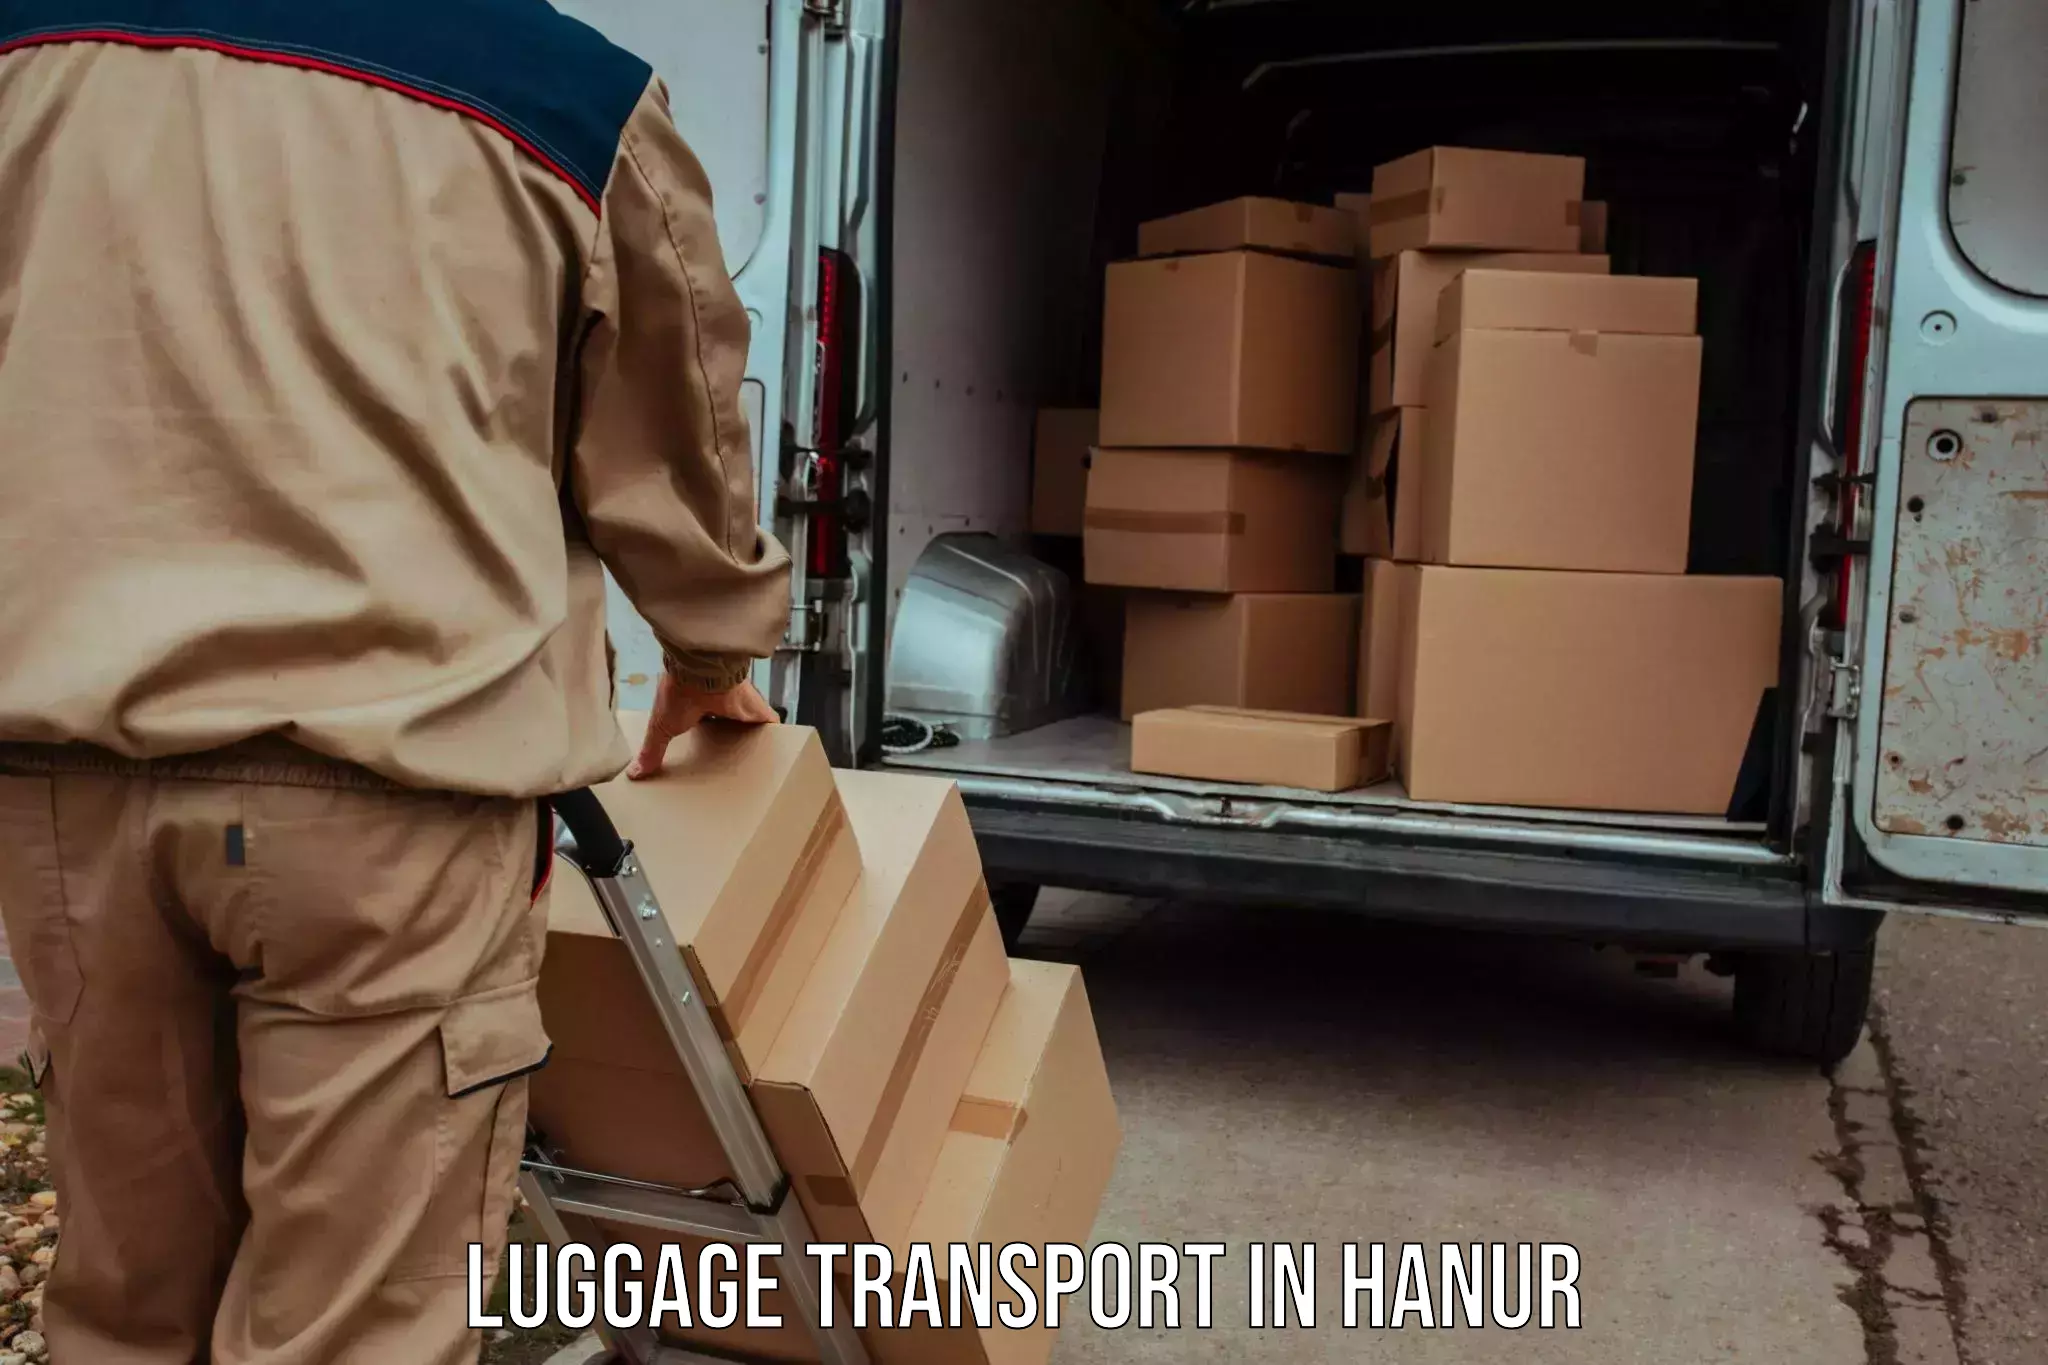 Premium luggage delivery in Hanur